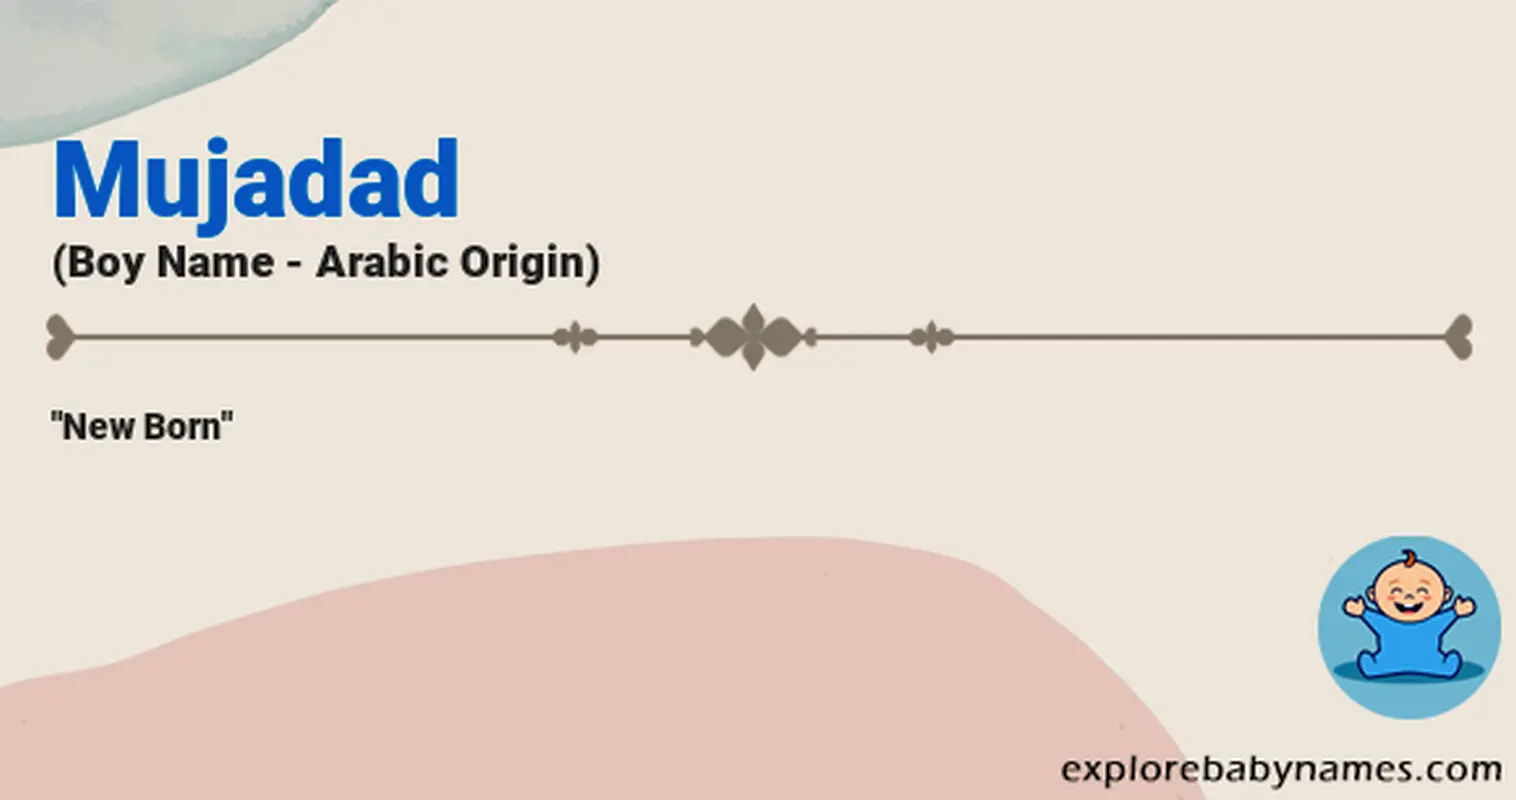 Meaning of Mujadad